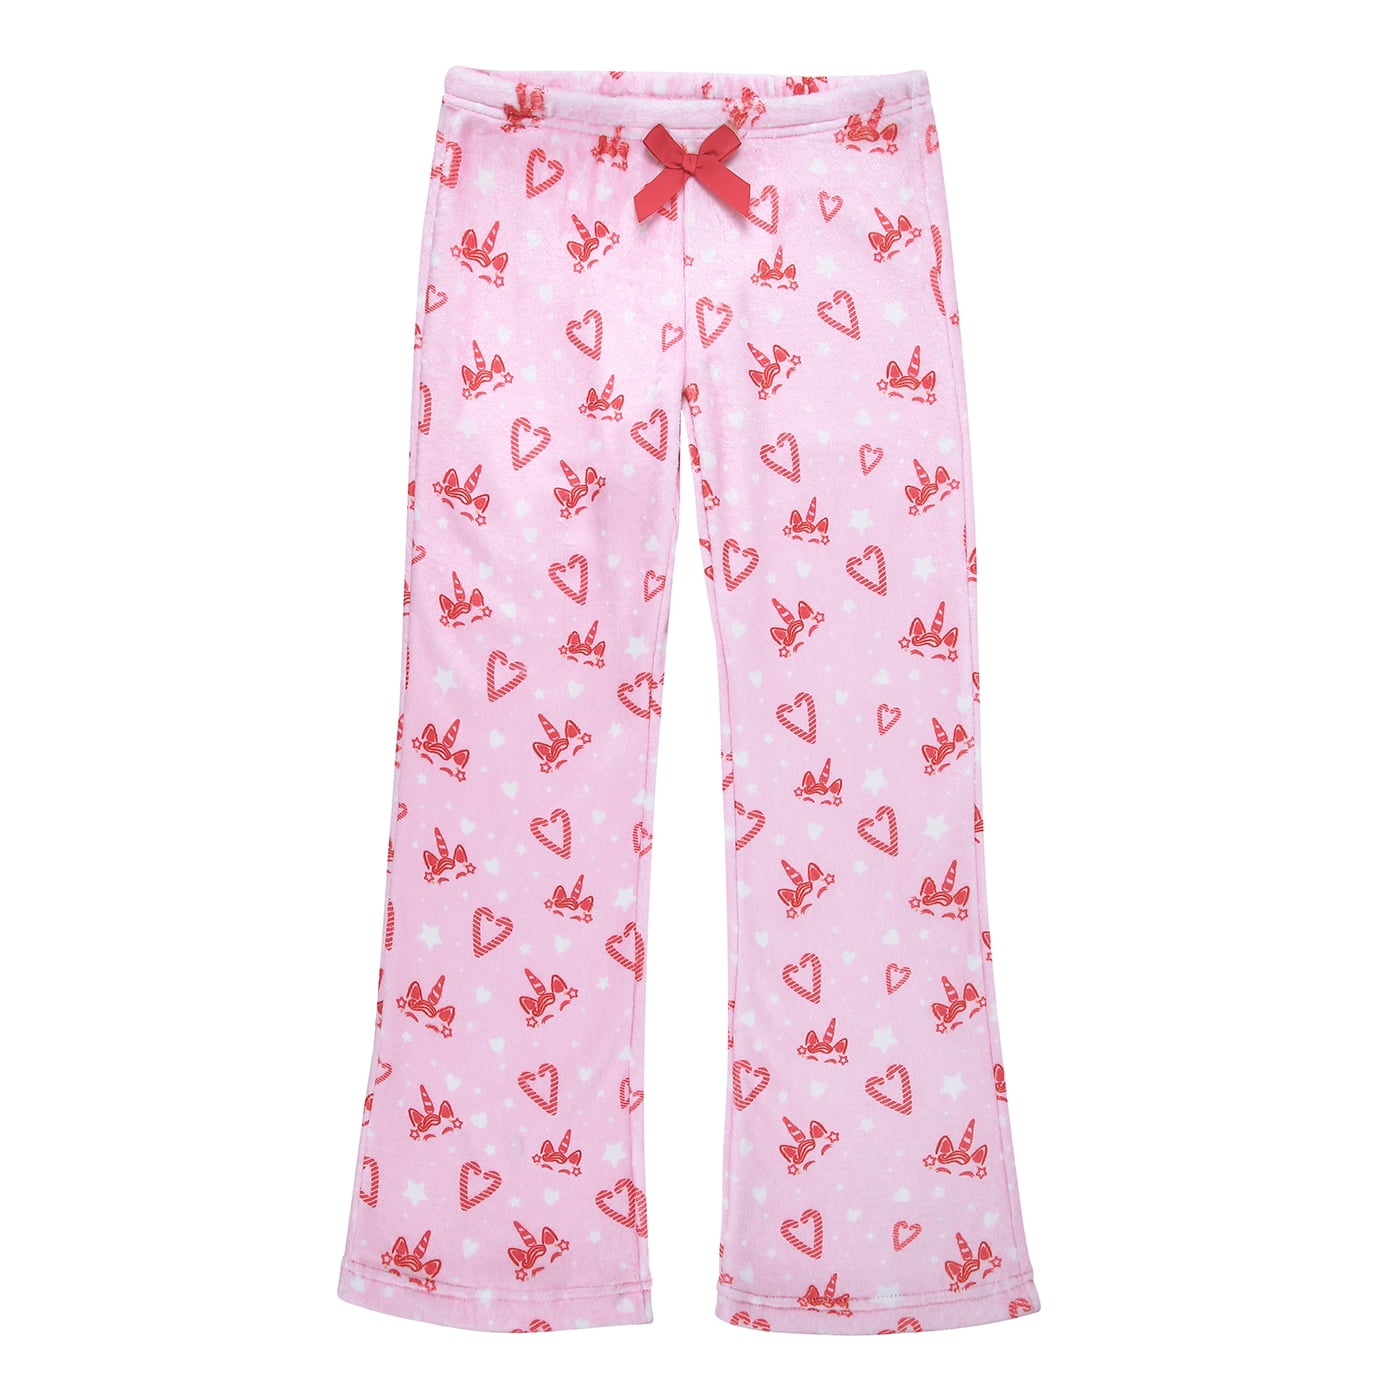 5-12 Years AIDEAONE Girls Pajama Pants Soft Fleece Sleepwear Casual Flannel Pajama Bottoms